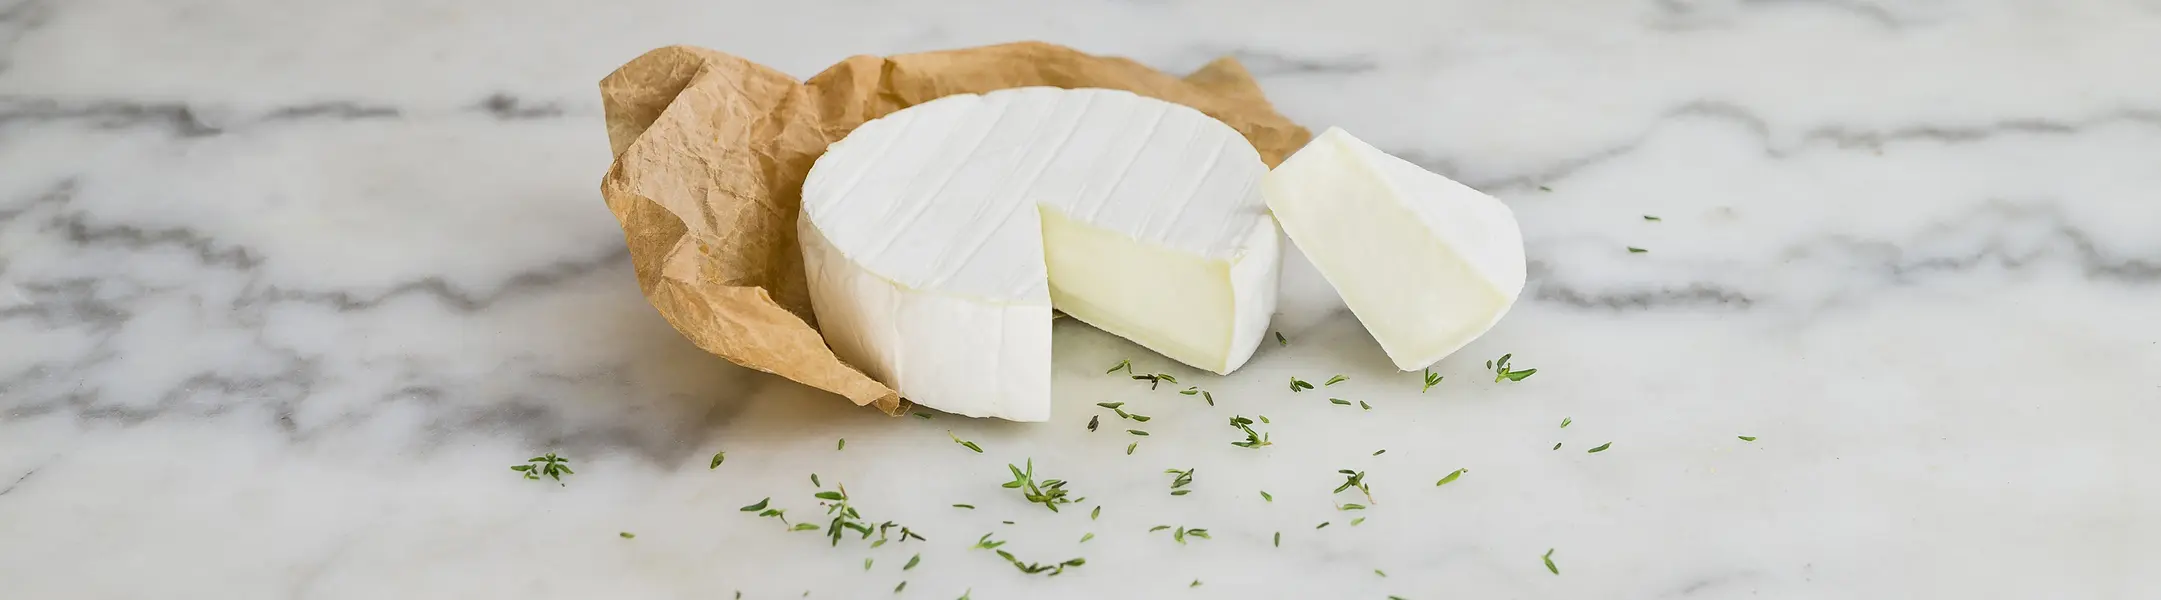 Comment bien conserver son fromage ?